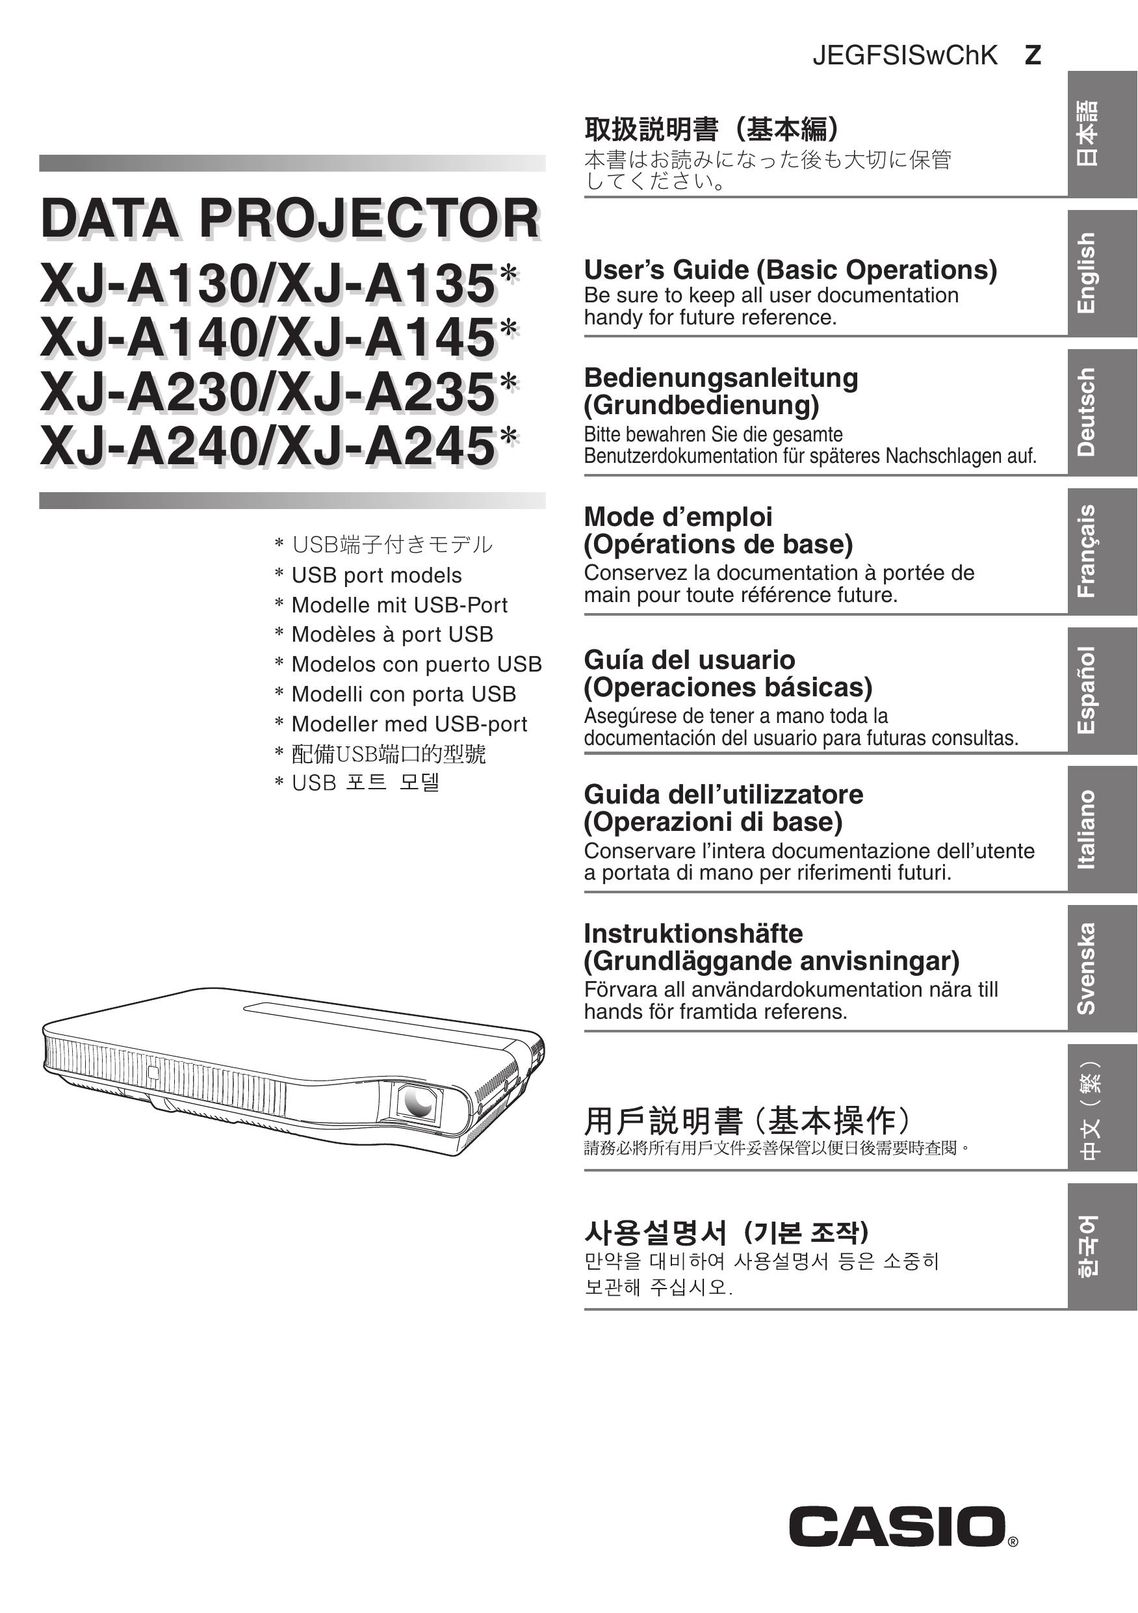 Casio XJ-A240 Projector User Manual